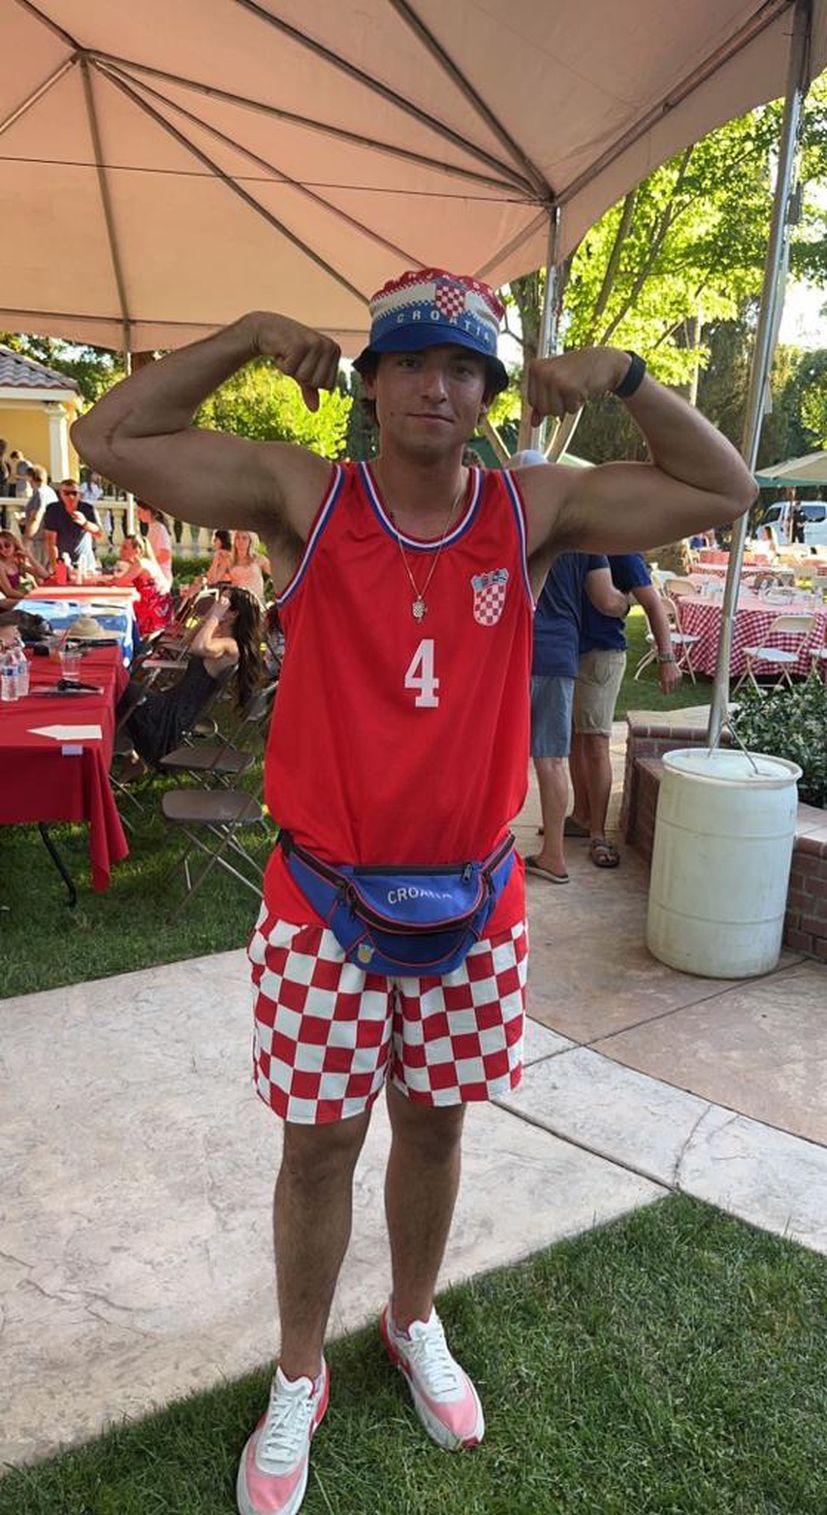 Meet the Croatian-American with a promising baseball future